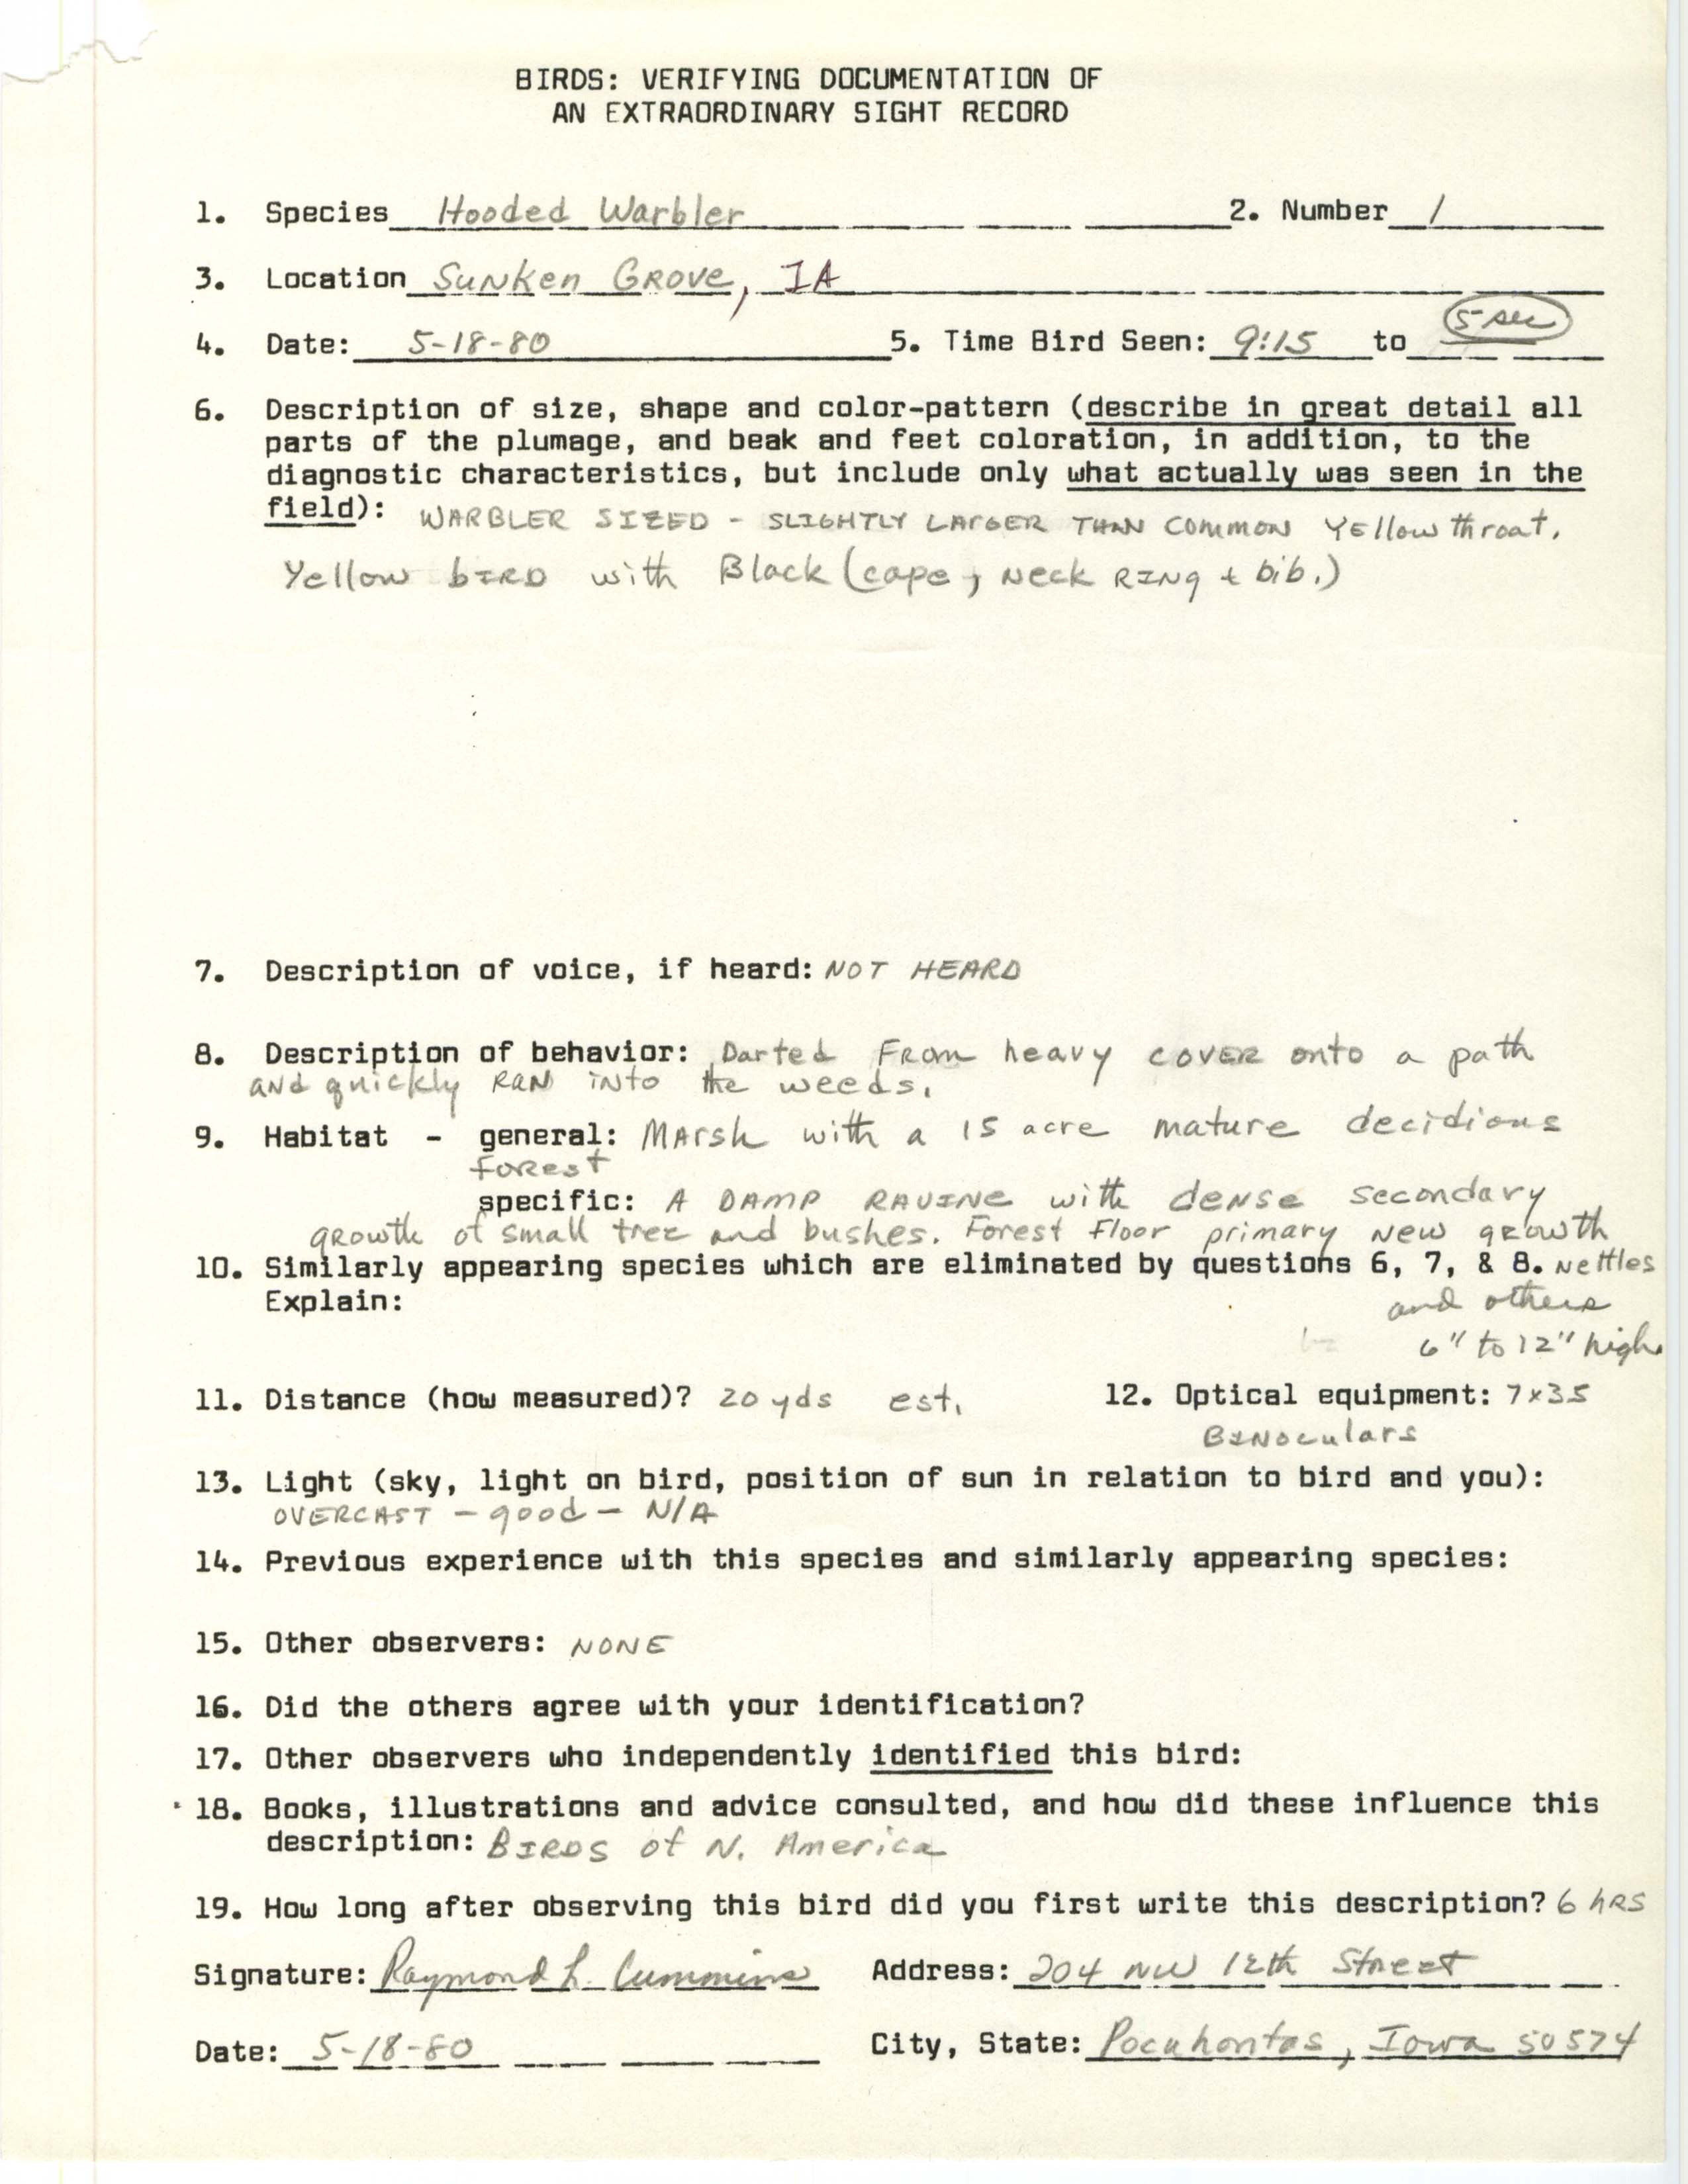 Rare bird documentation form for Hooded Warbler at Sunken Grove, 1980